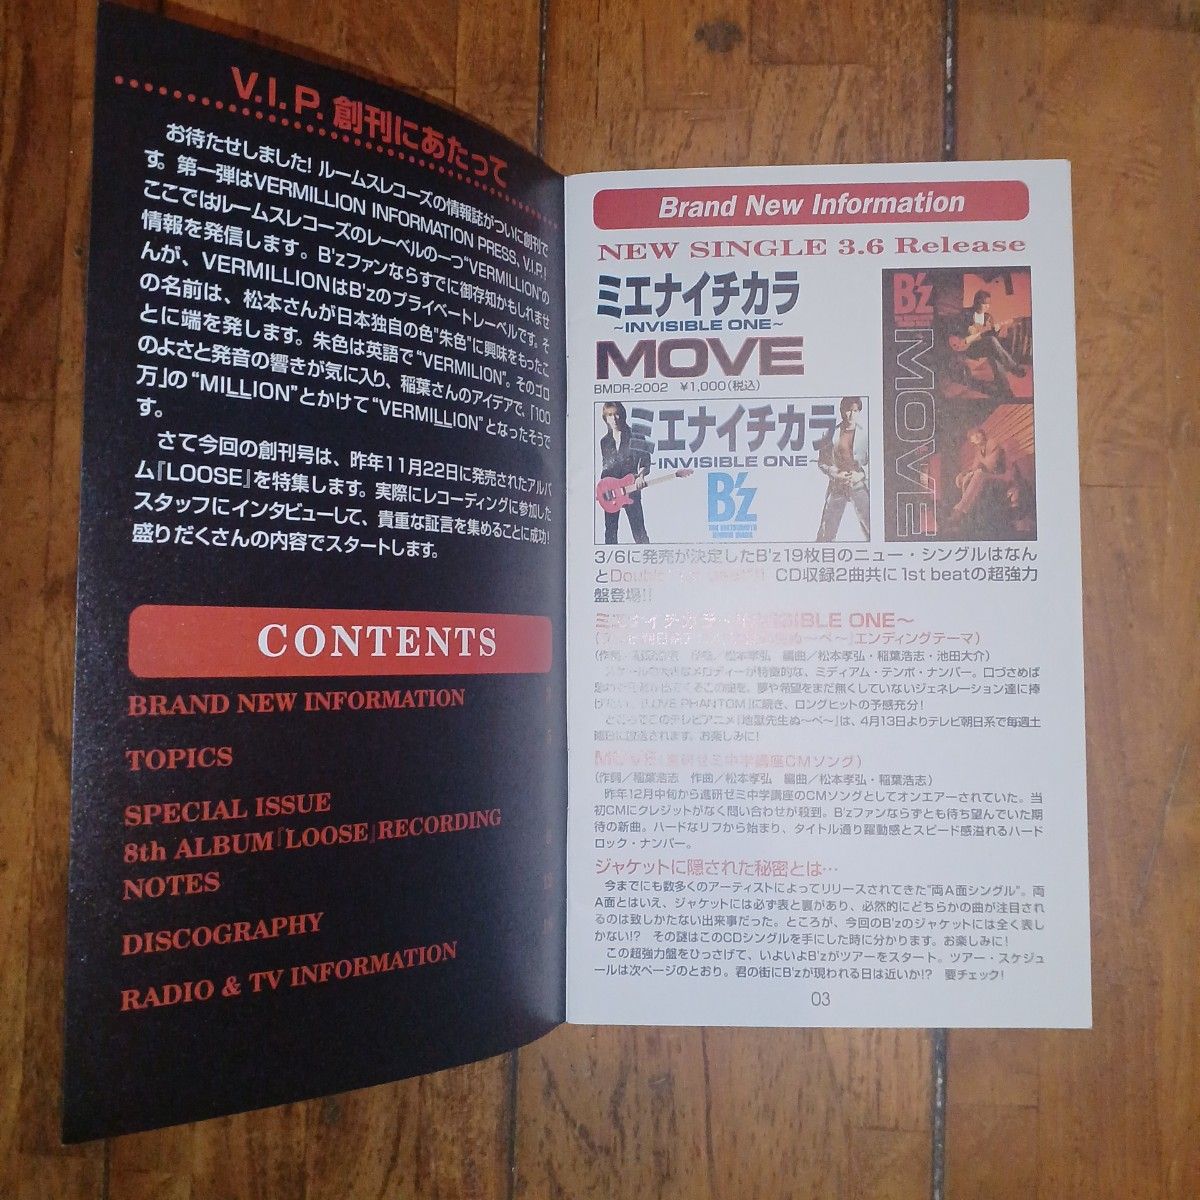 B'z グッズ 冊子(V.I.P Vermillion Vol.1,2,3)(Rooms Return vol.1,2)